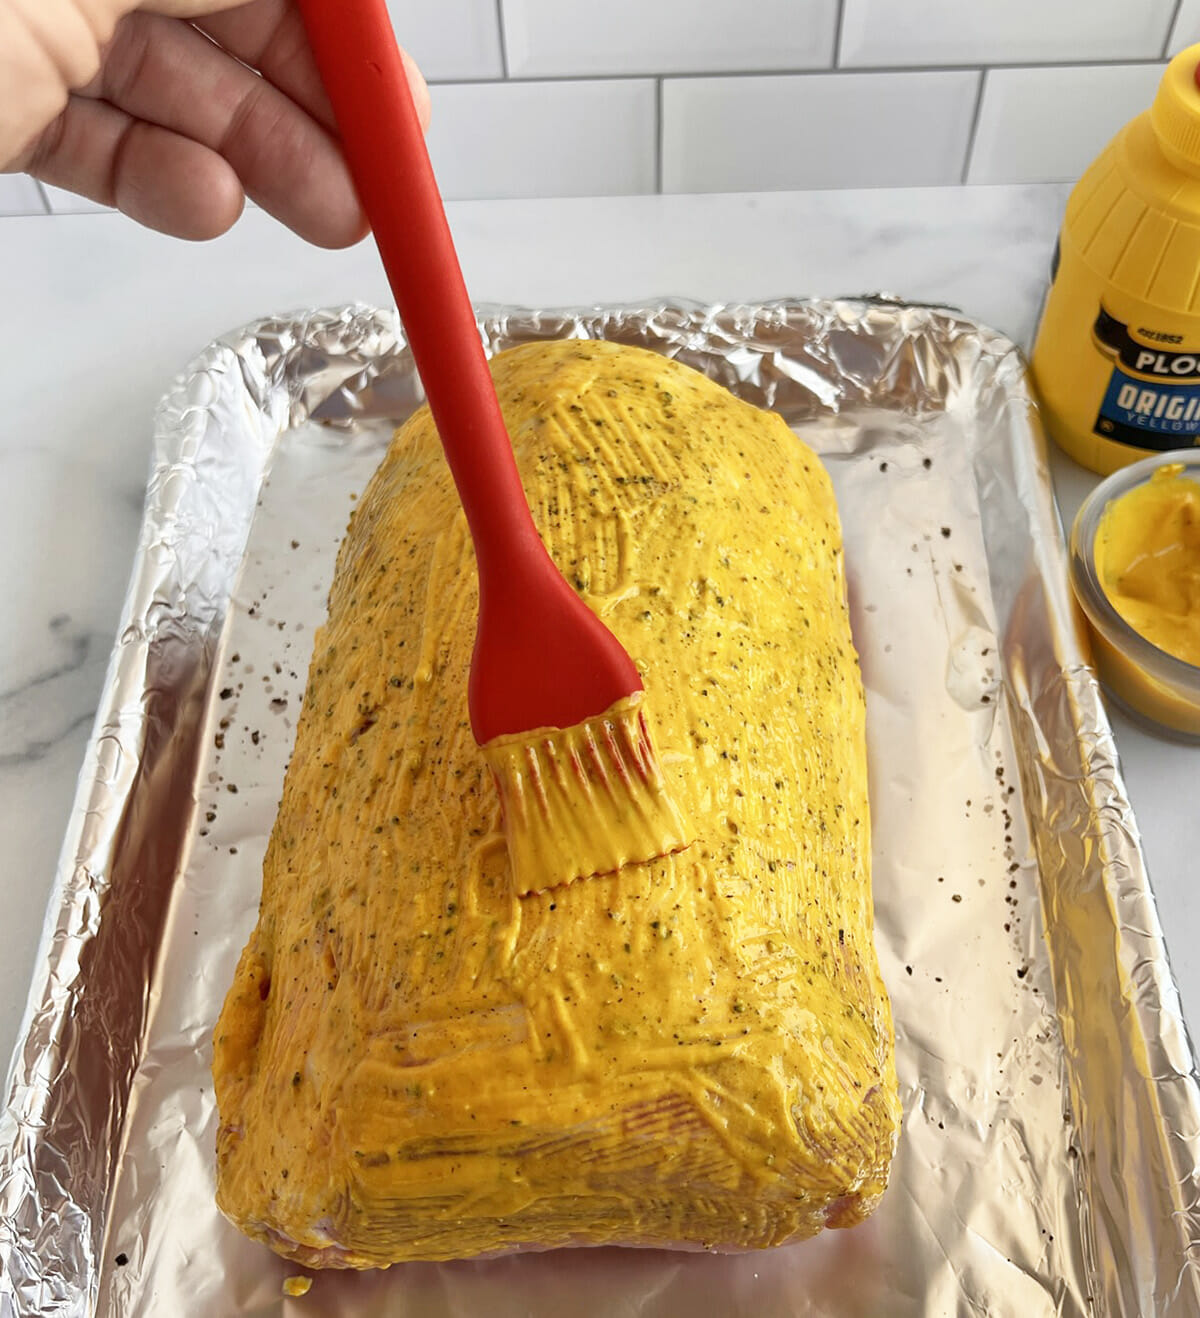 Brushing mustard onto a pork loin roast.